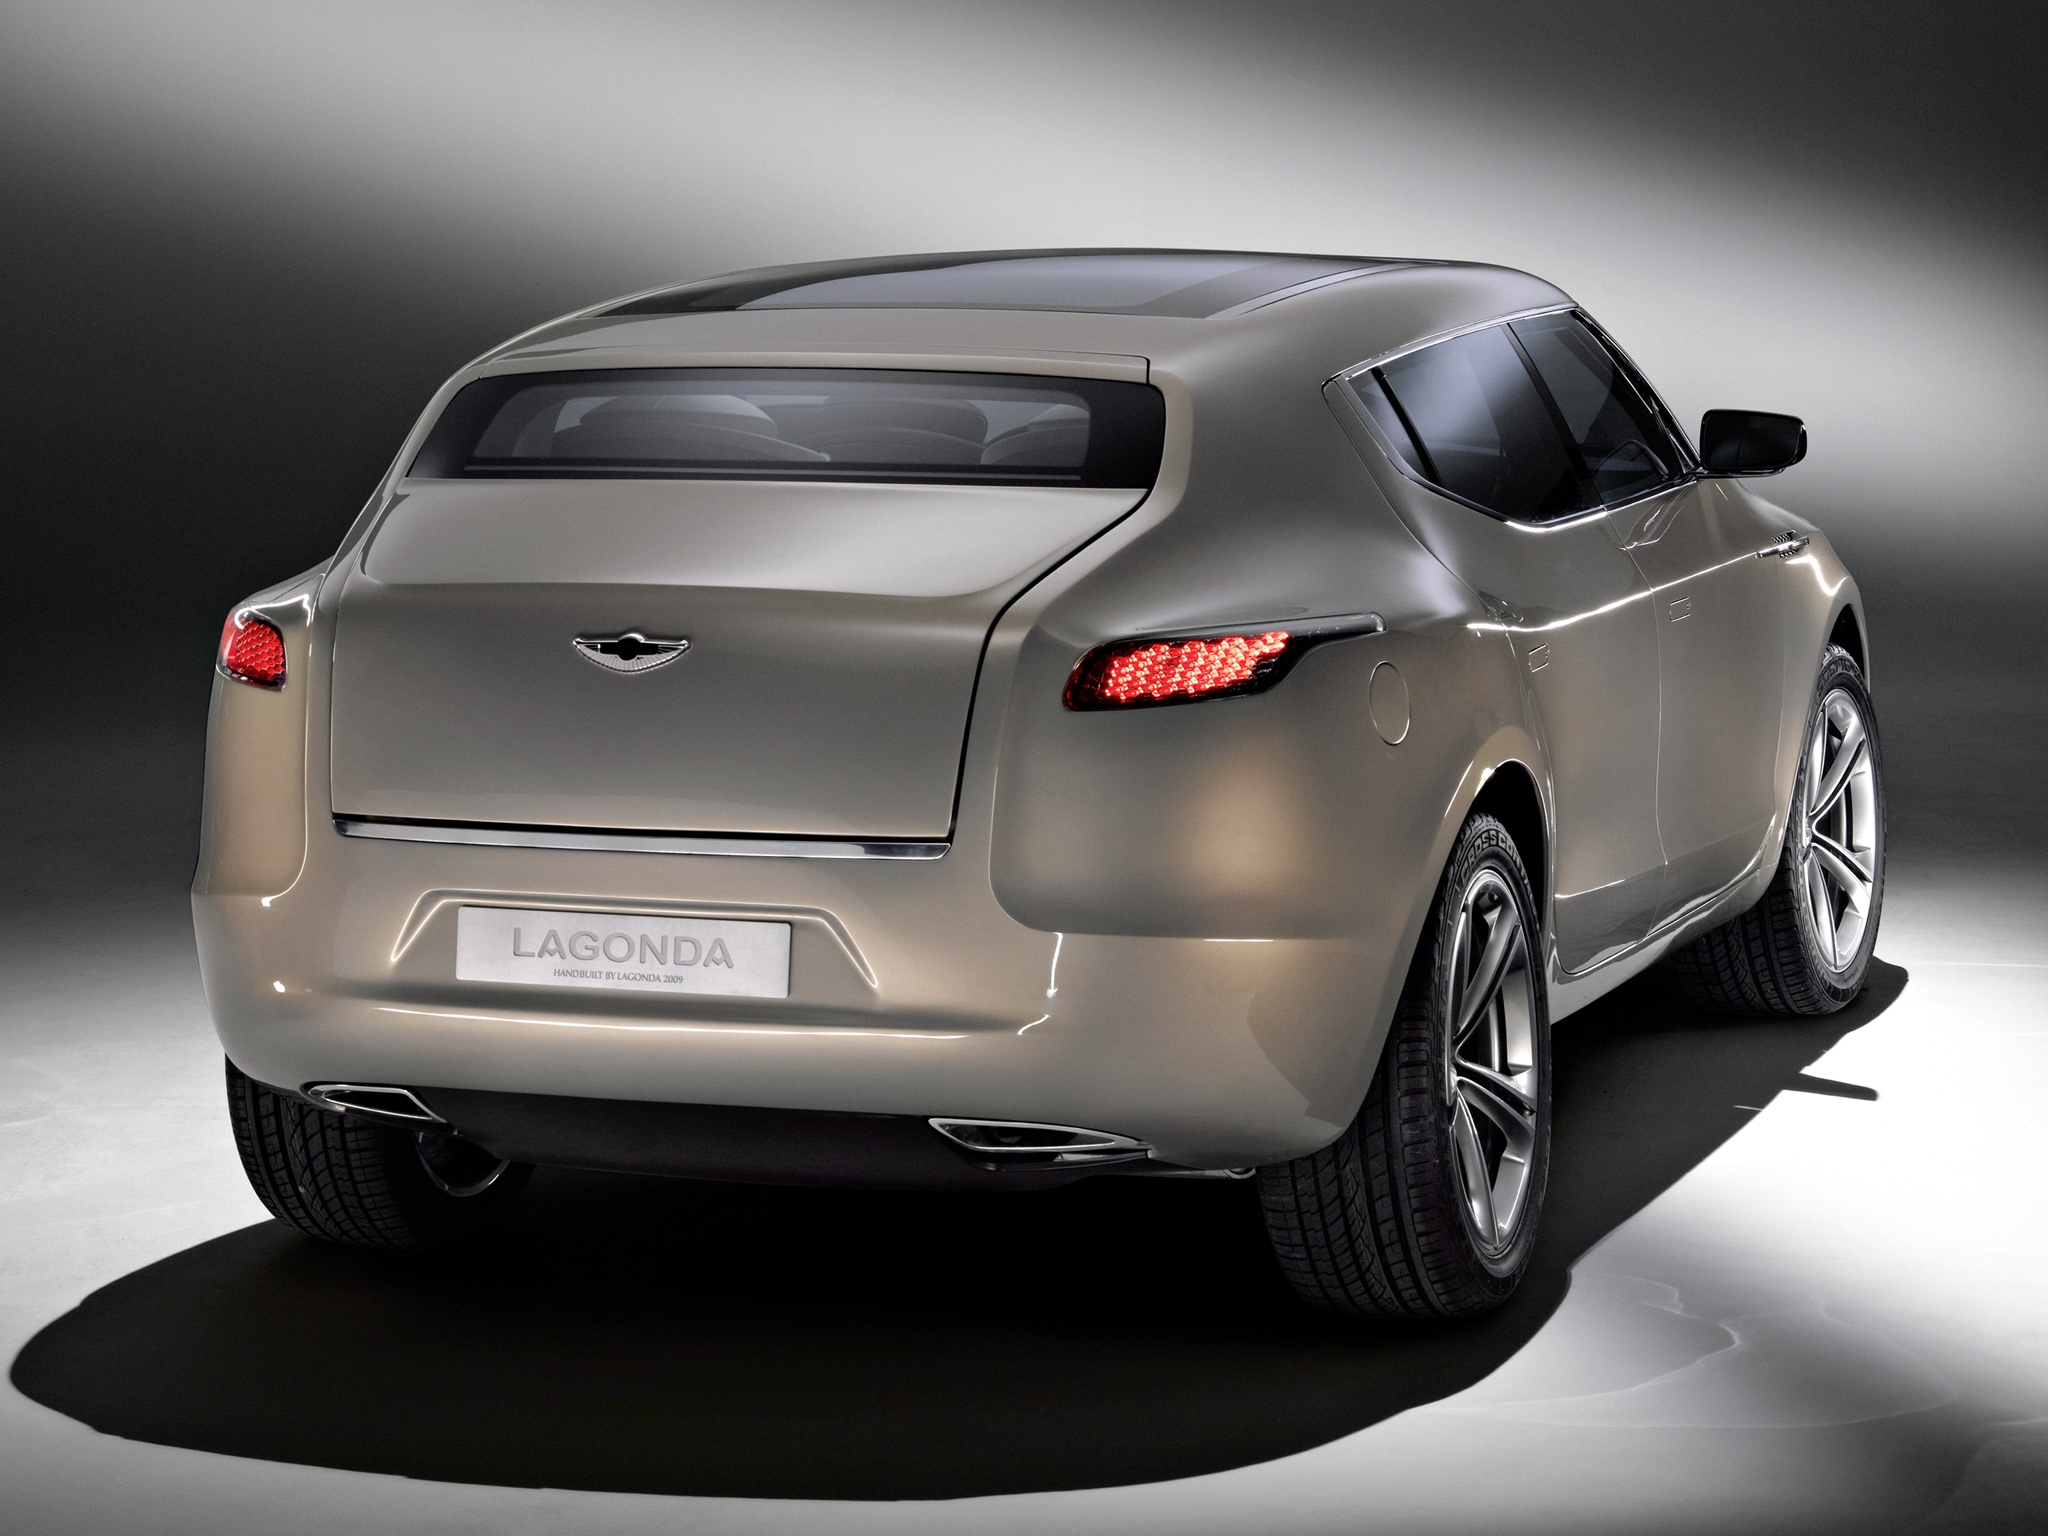 aston martin, cars, back view, rear view, style, 2009, concept car, beige metallic, lagonda